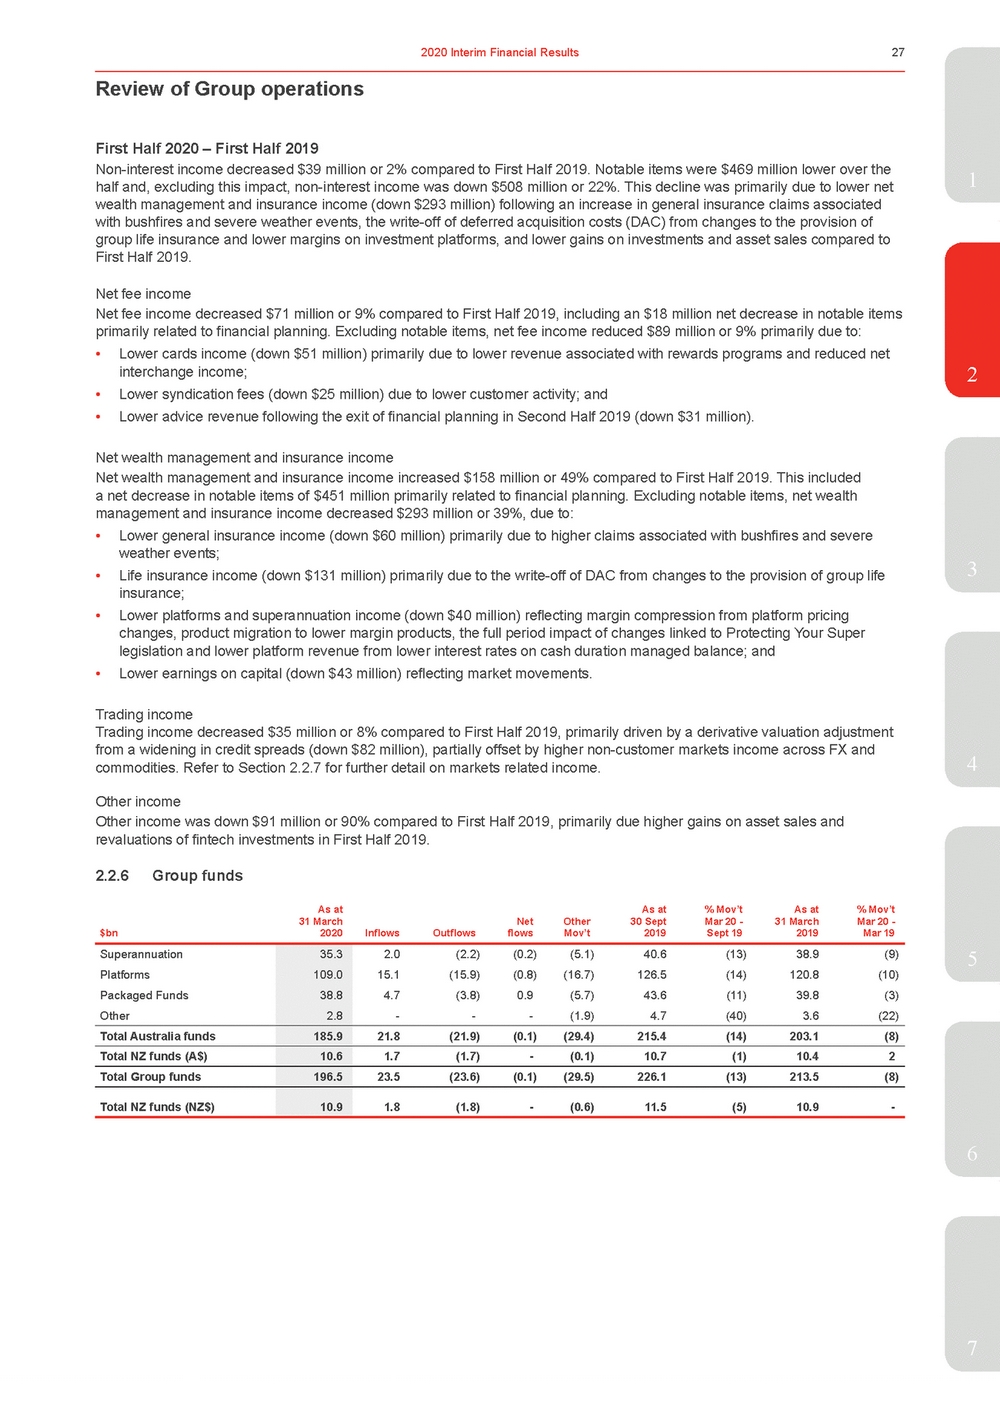 11676-3-ex1_westpac 2020 interim financial results announcement_page_032.jpg